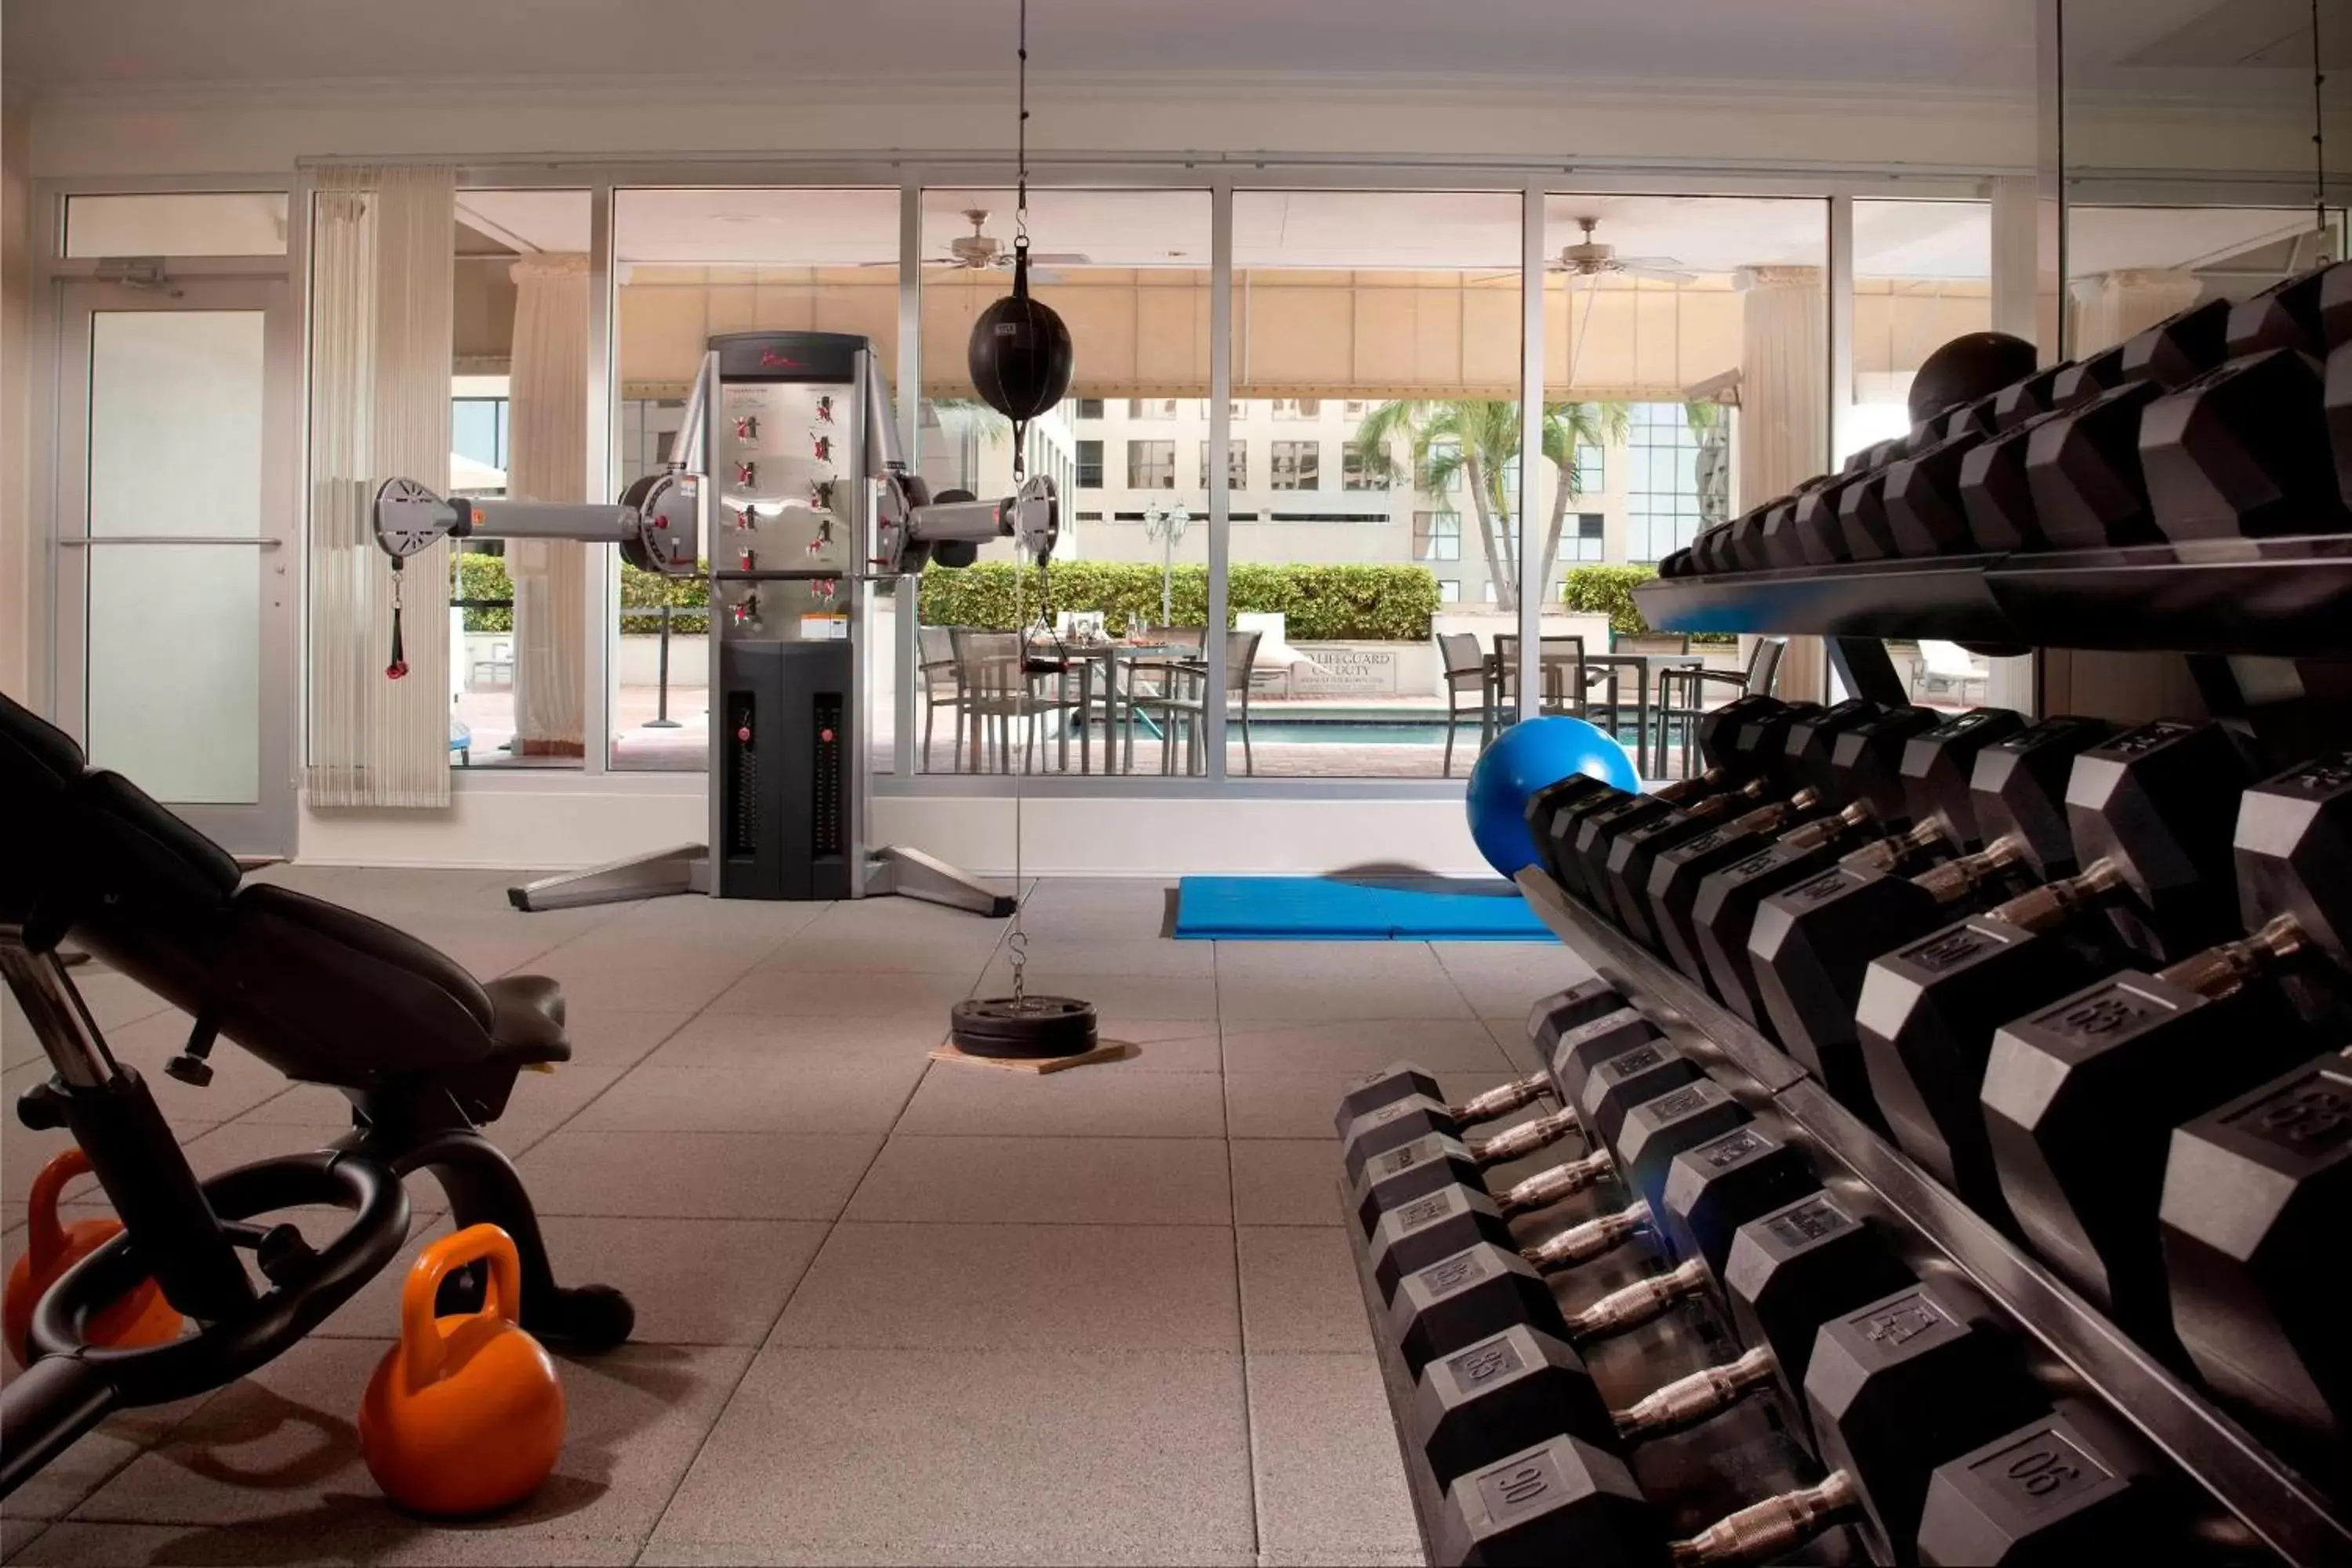 Fitness centre/facilities, Fitness Center/Facilities in Miami Marriott Dadeland